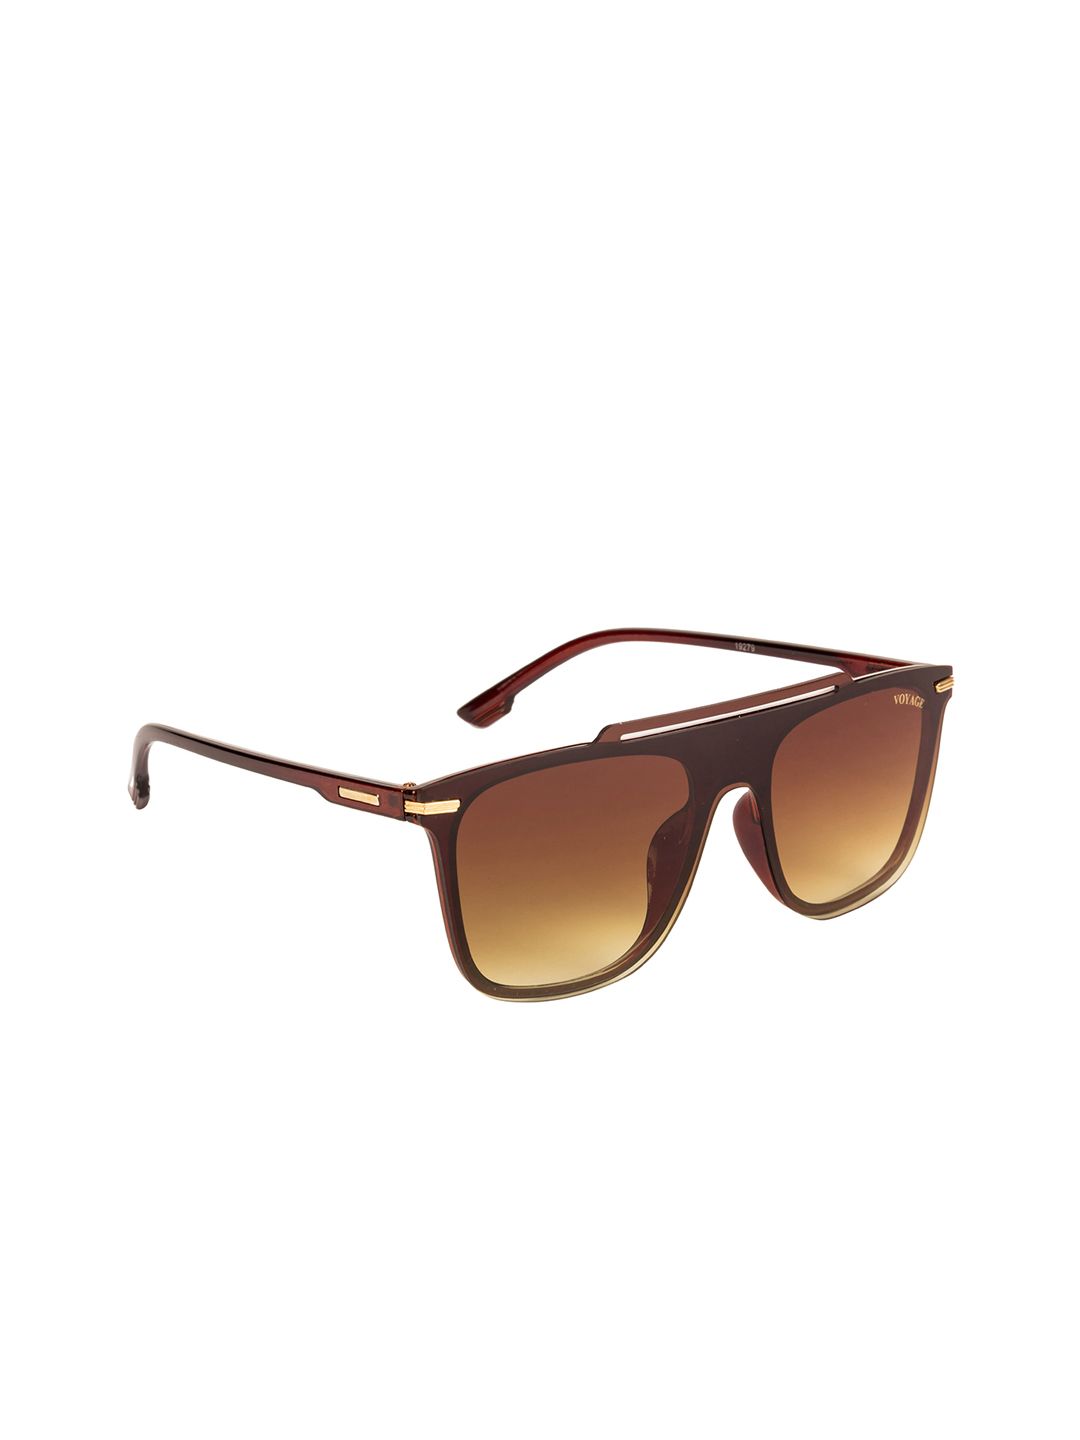 Voyage Unisex Wayfarer Sunglasses 19279MG3279 Price in India